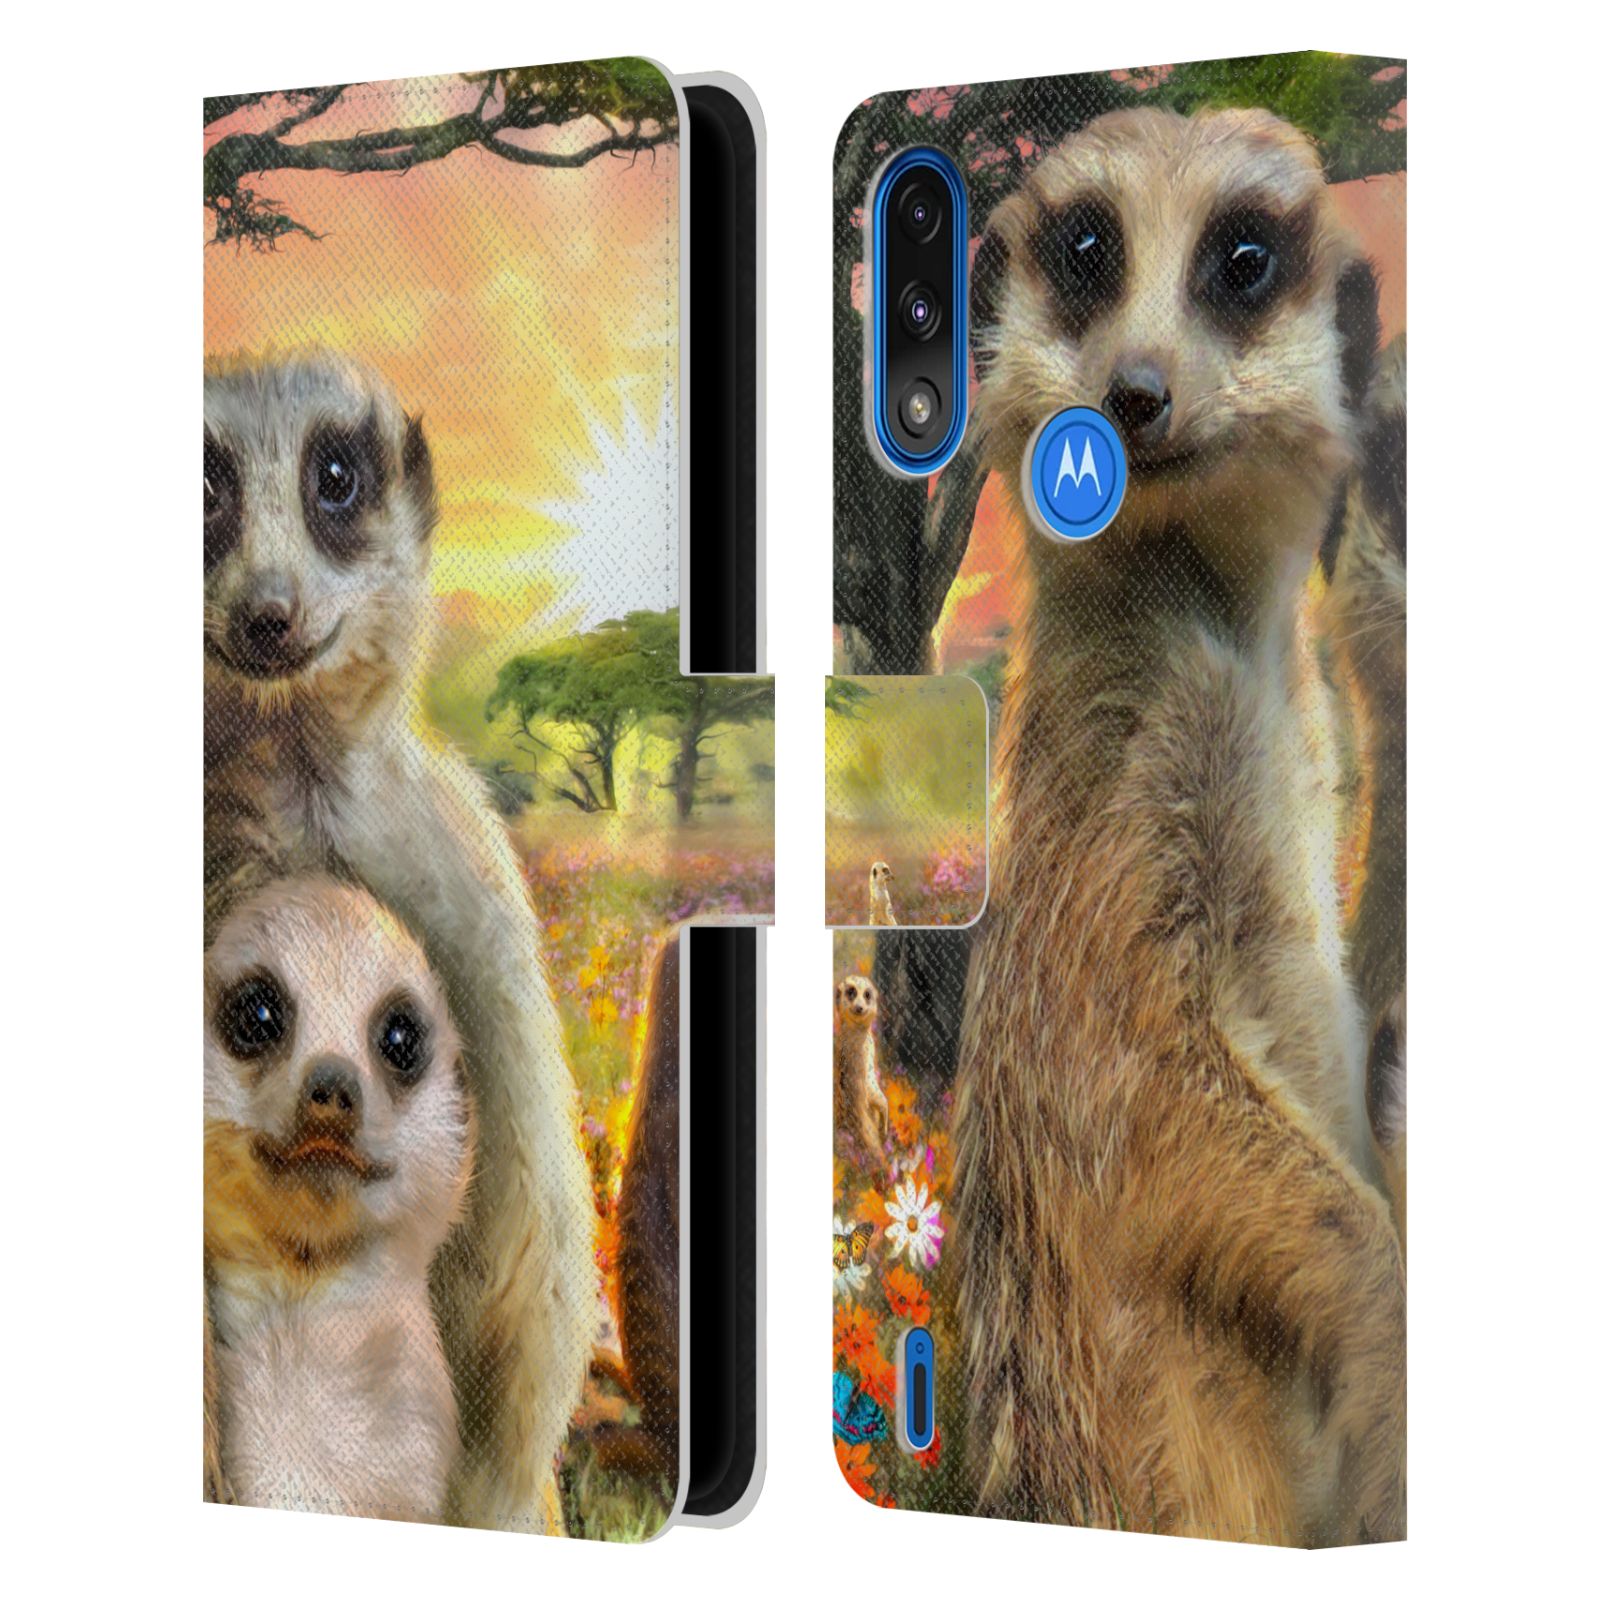 Pouzdro HEAD CASE na mobil Motorola Moto E7 POWER  malé surikaty